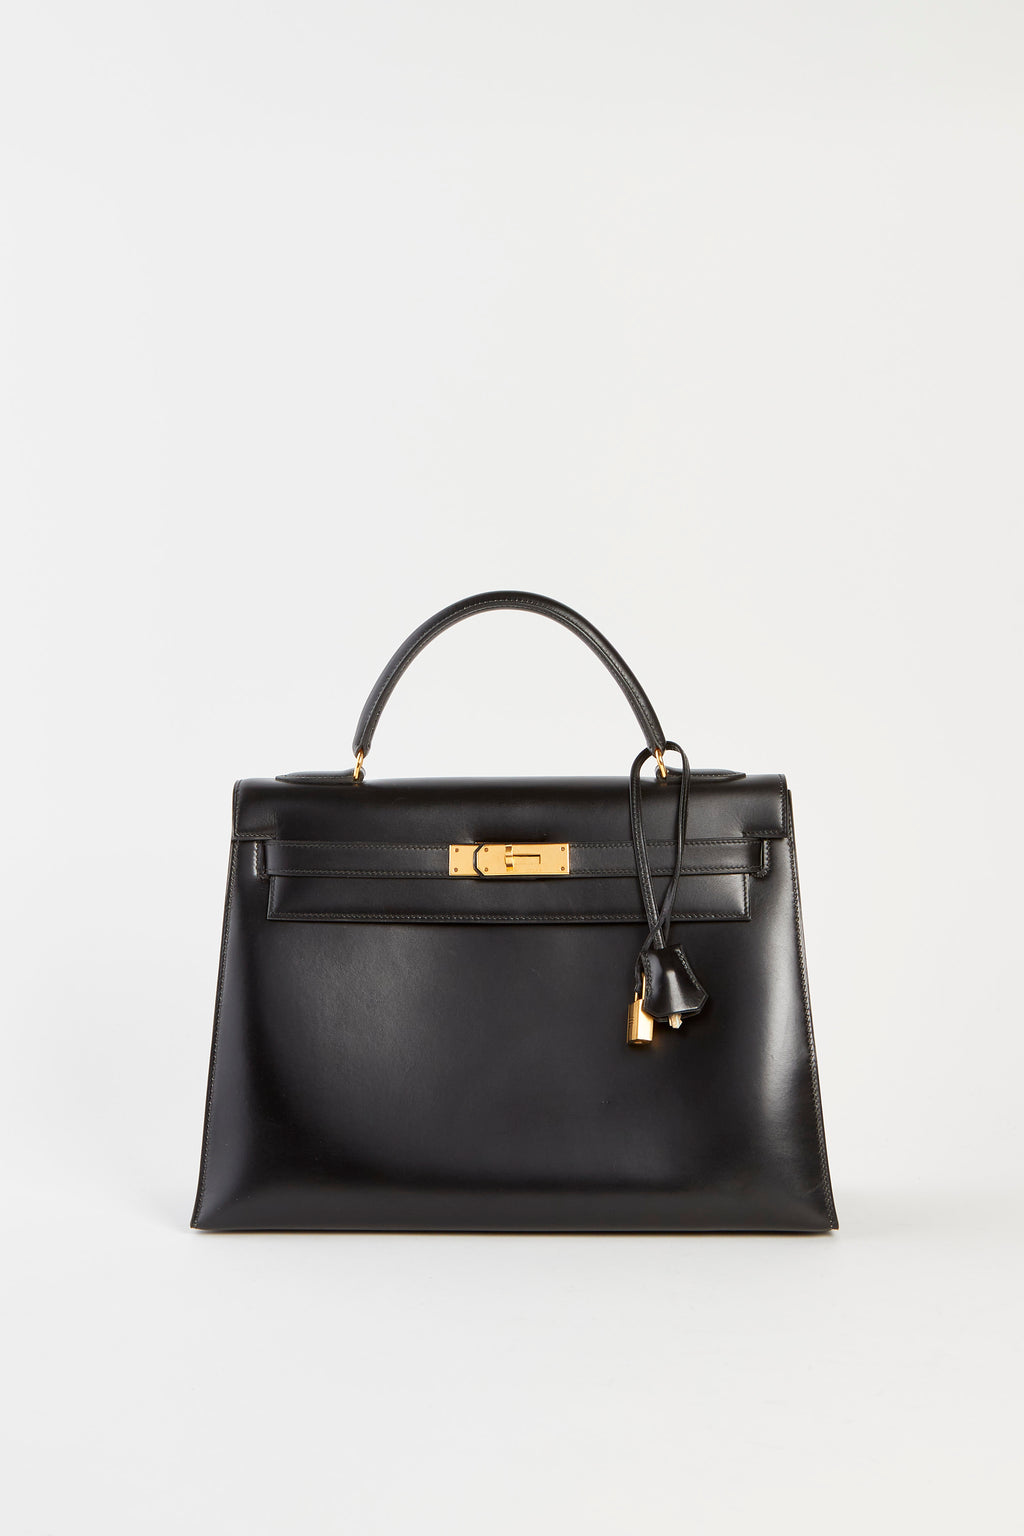 Vintage Hermès Kelly 32cm Black Box Calf Handbag GHW